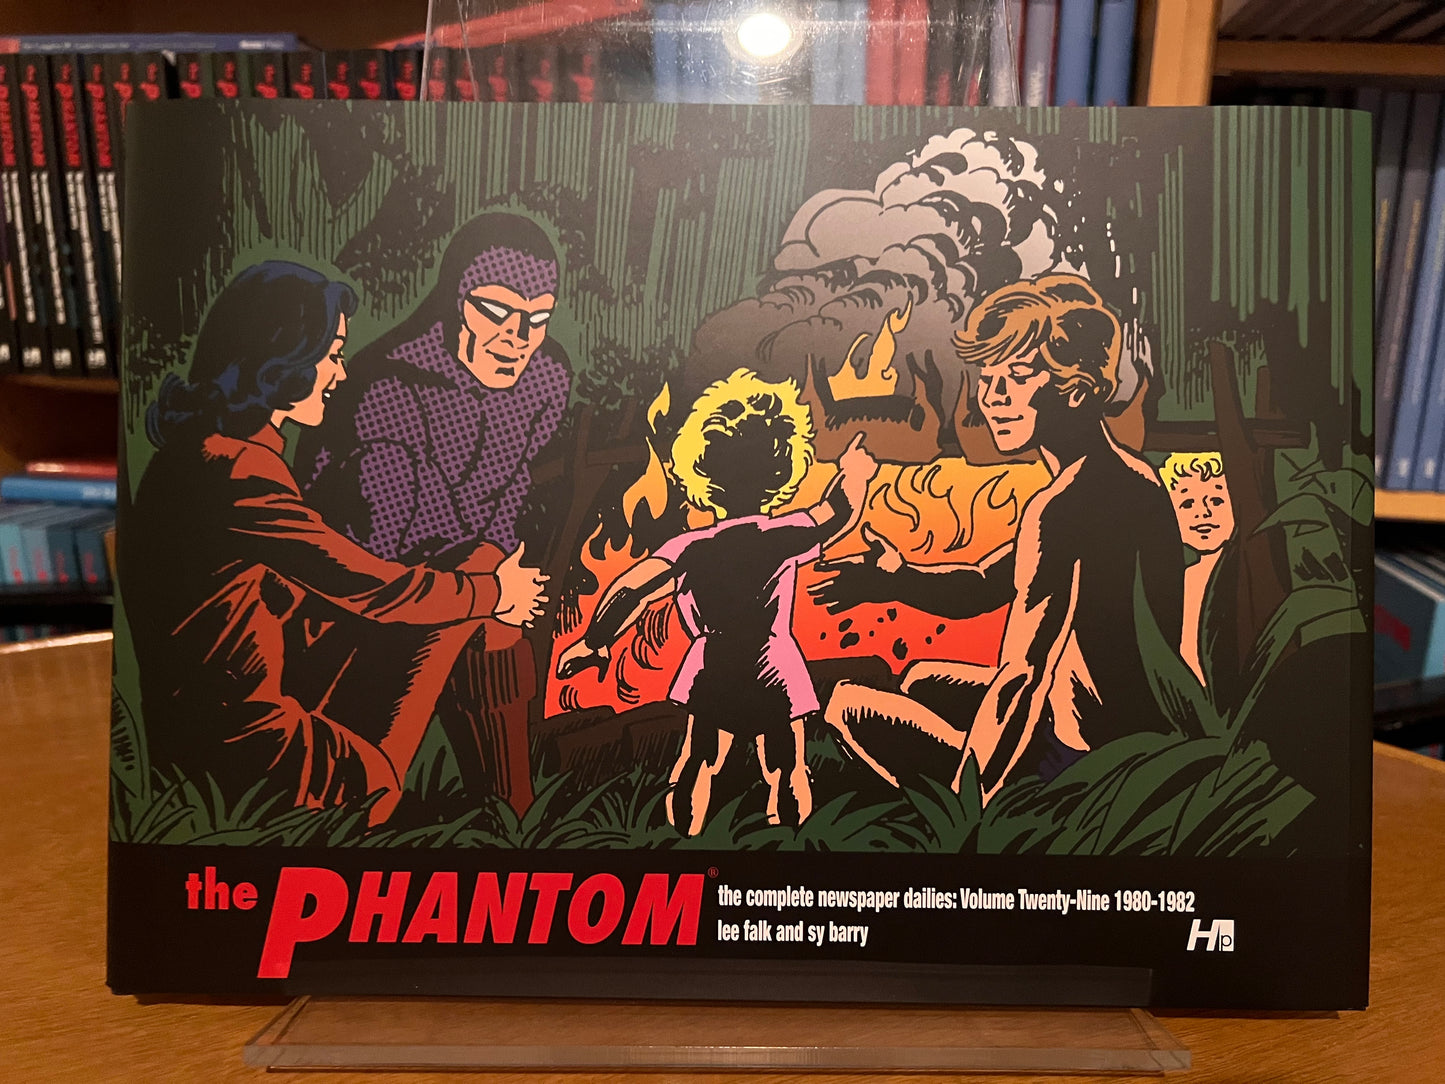 The Phantom Dailies: Vol. 29 (1980-1982)